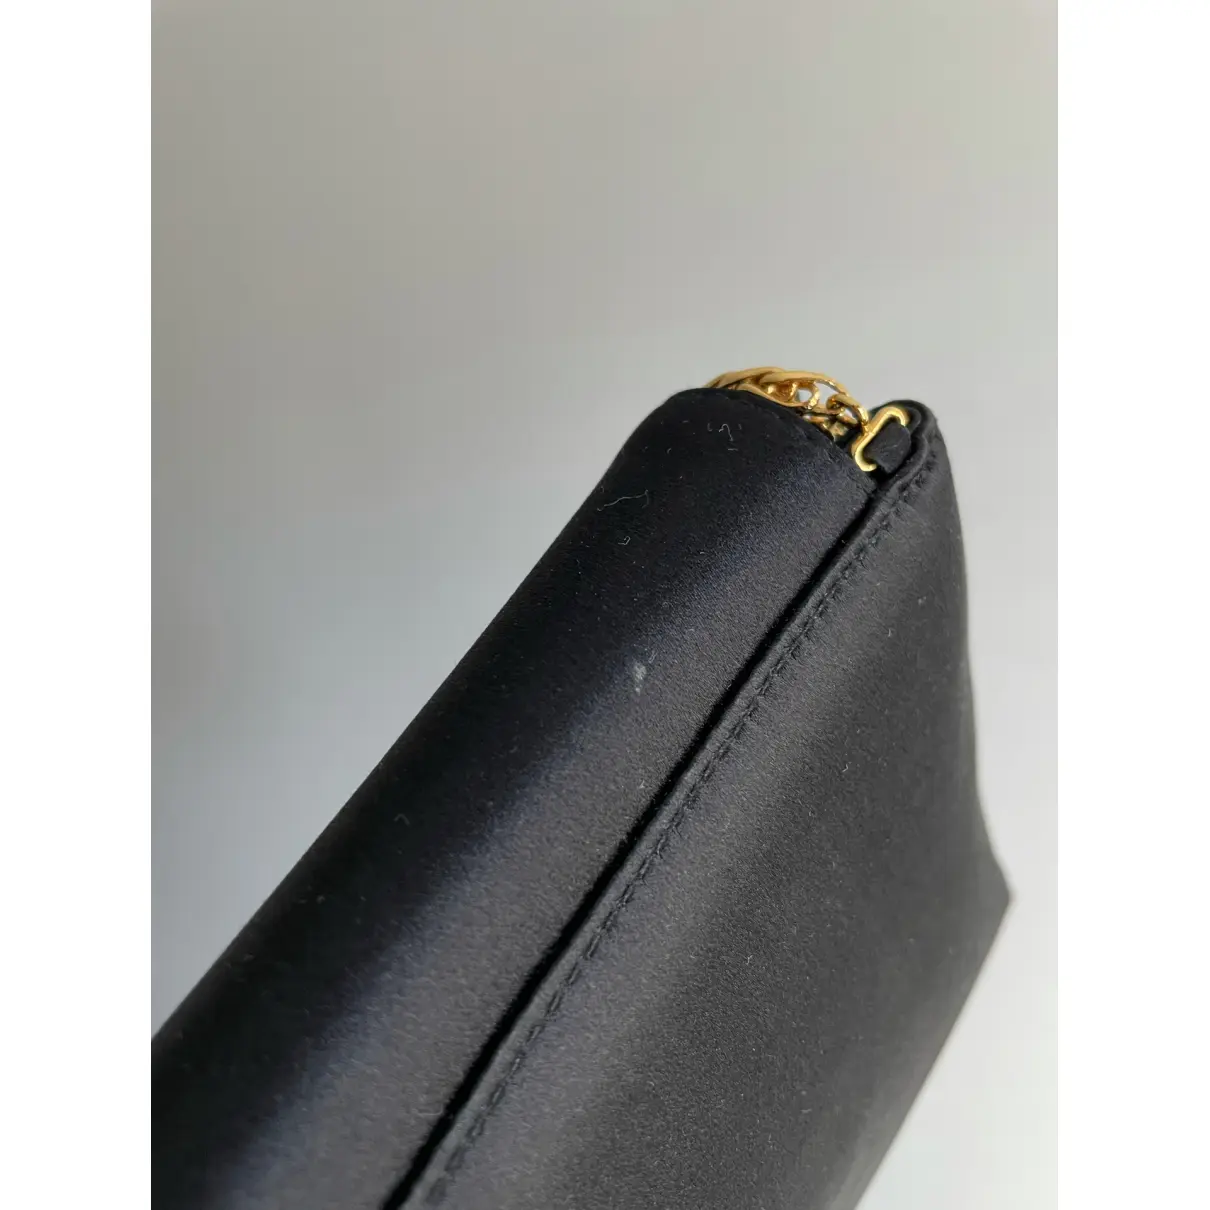 Buy Chanel Timeless/Classique silk handbag online